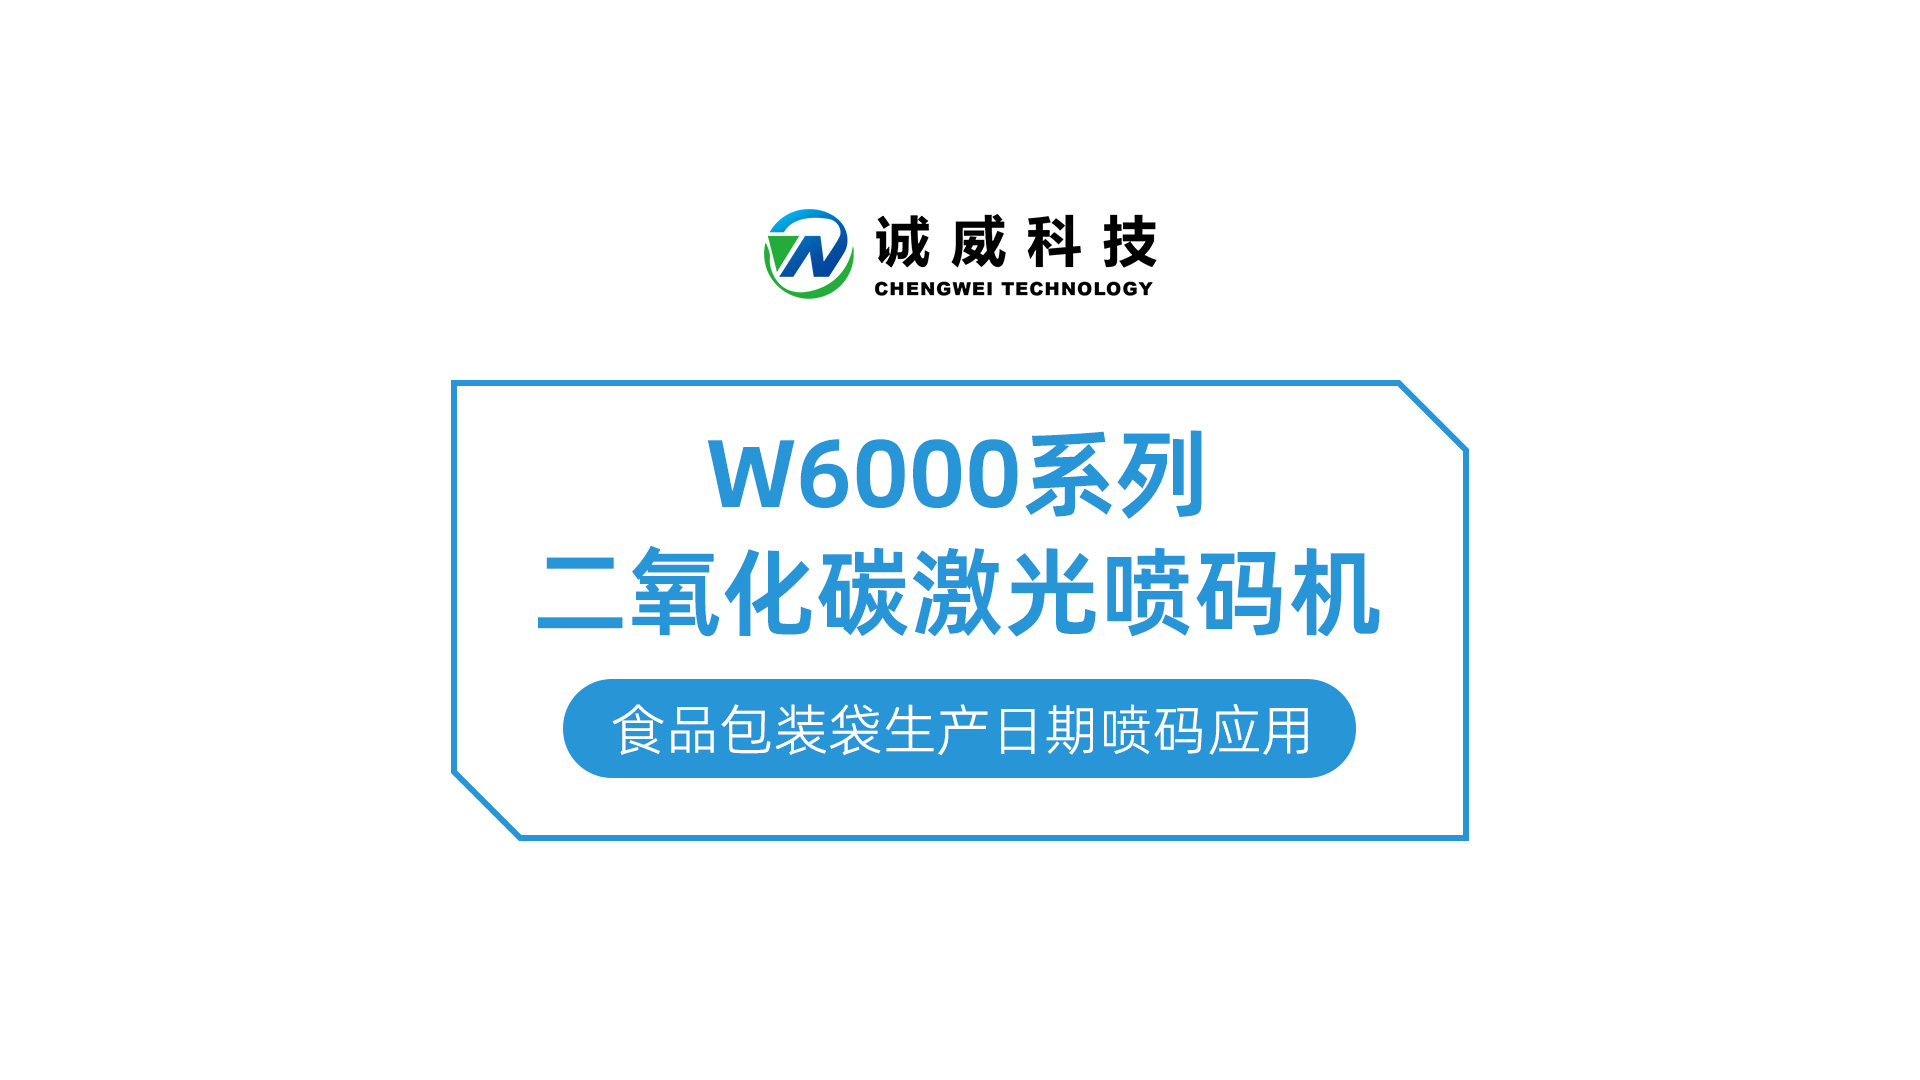 W6000系列二氧化碳激光喷码机-食品包装袋生产日期喷码应用.jpg